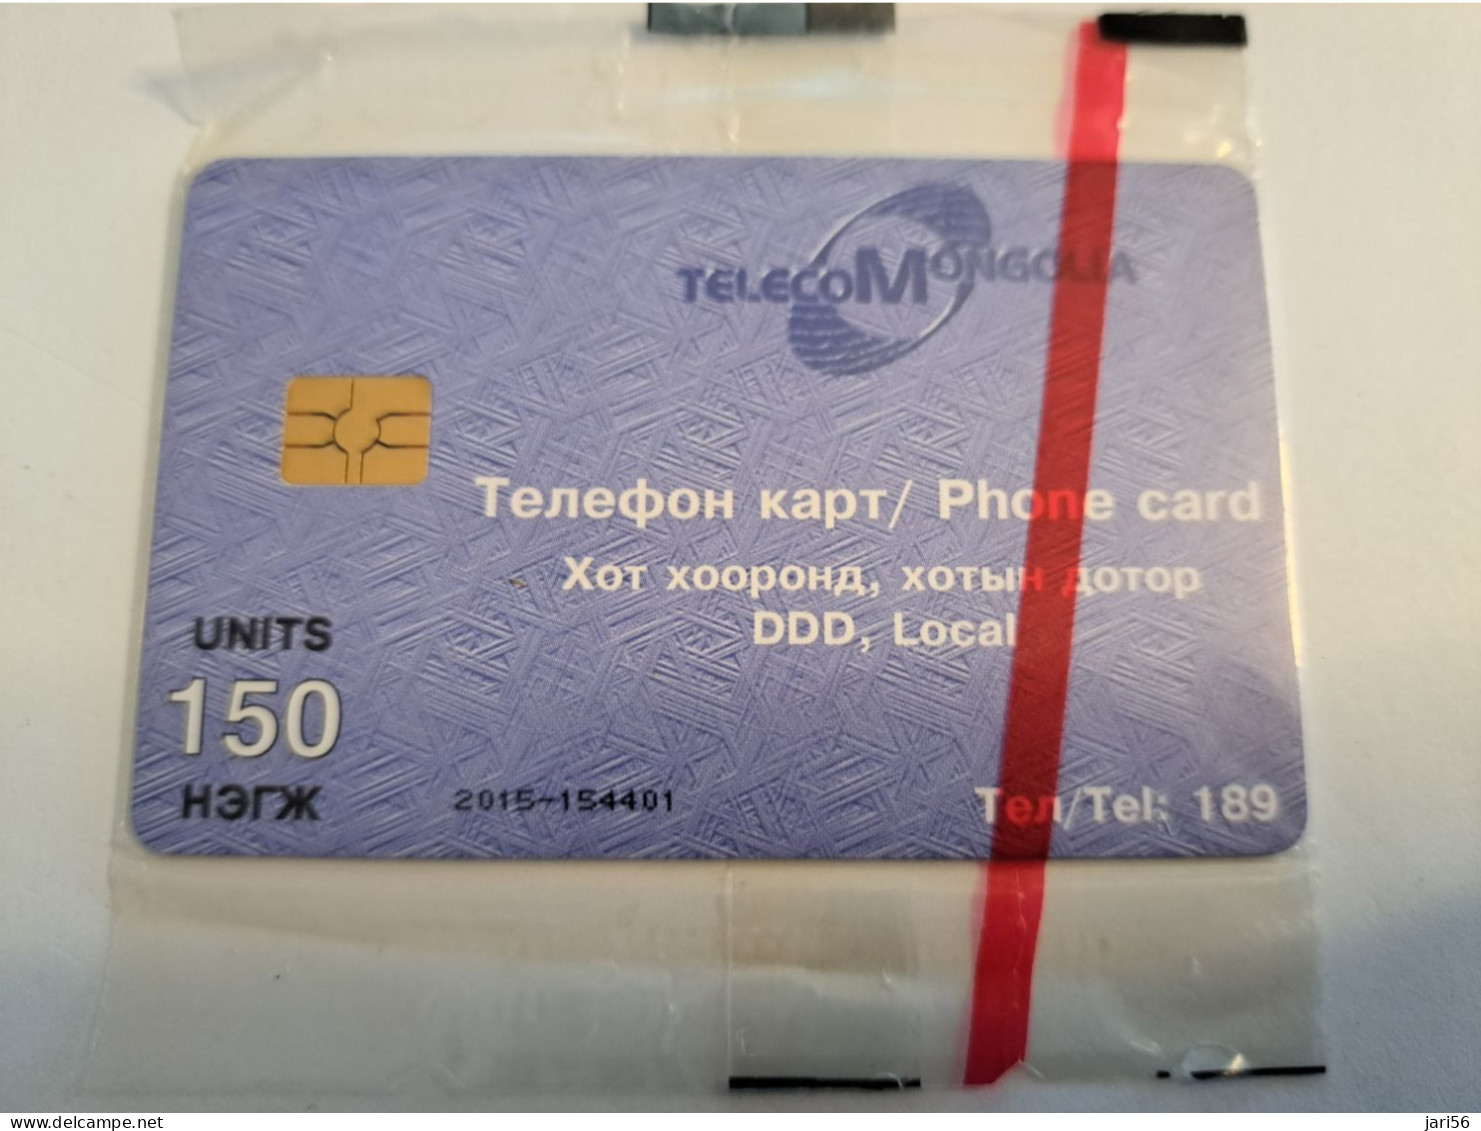 MONGOLIA  CHIPCARD / 150 UNITS / TELECO/MONGOLIA / MOUNTAIN/LAKE  MINT CARD / SEALED IN WRAPPER ** 16045 ** - Mongolie